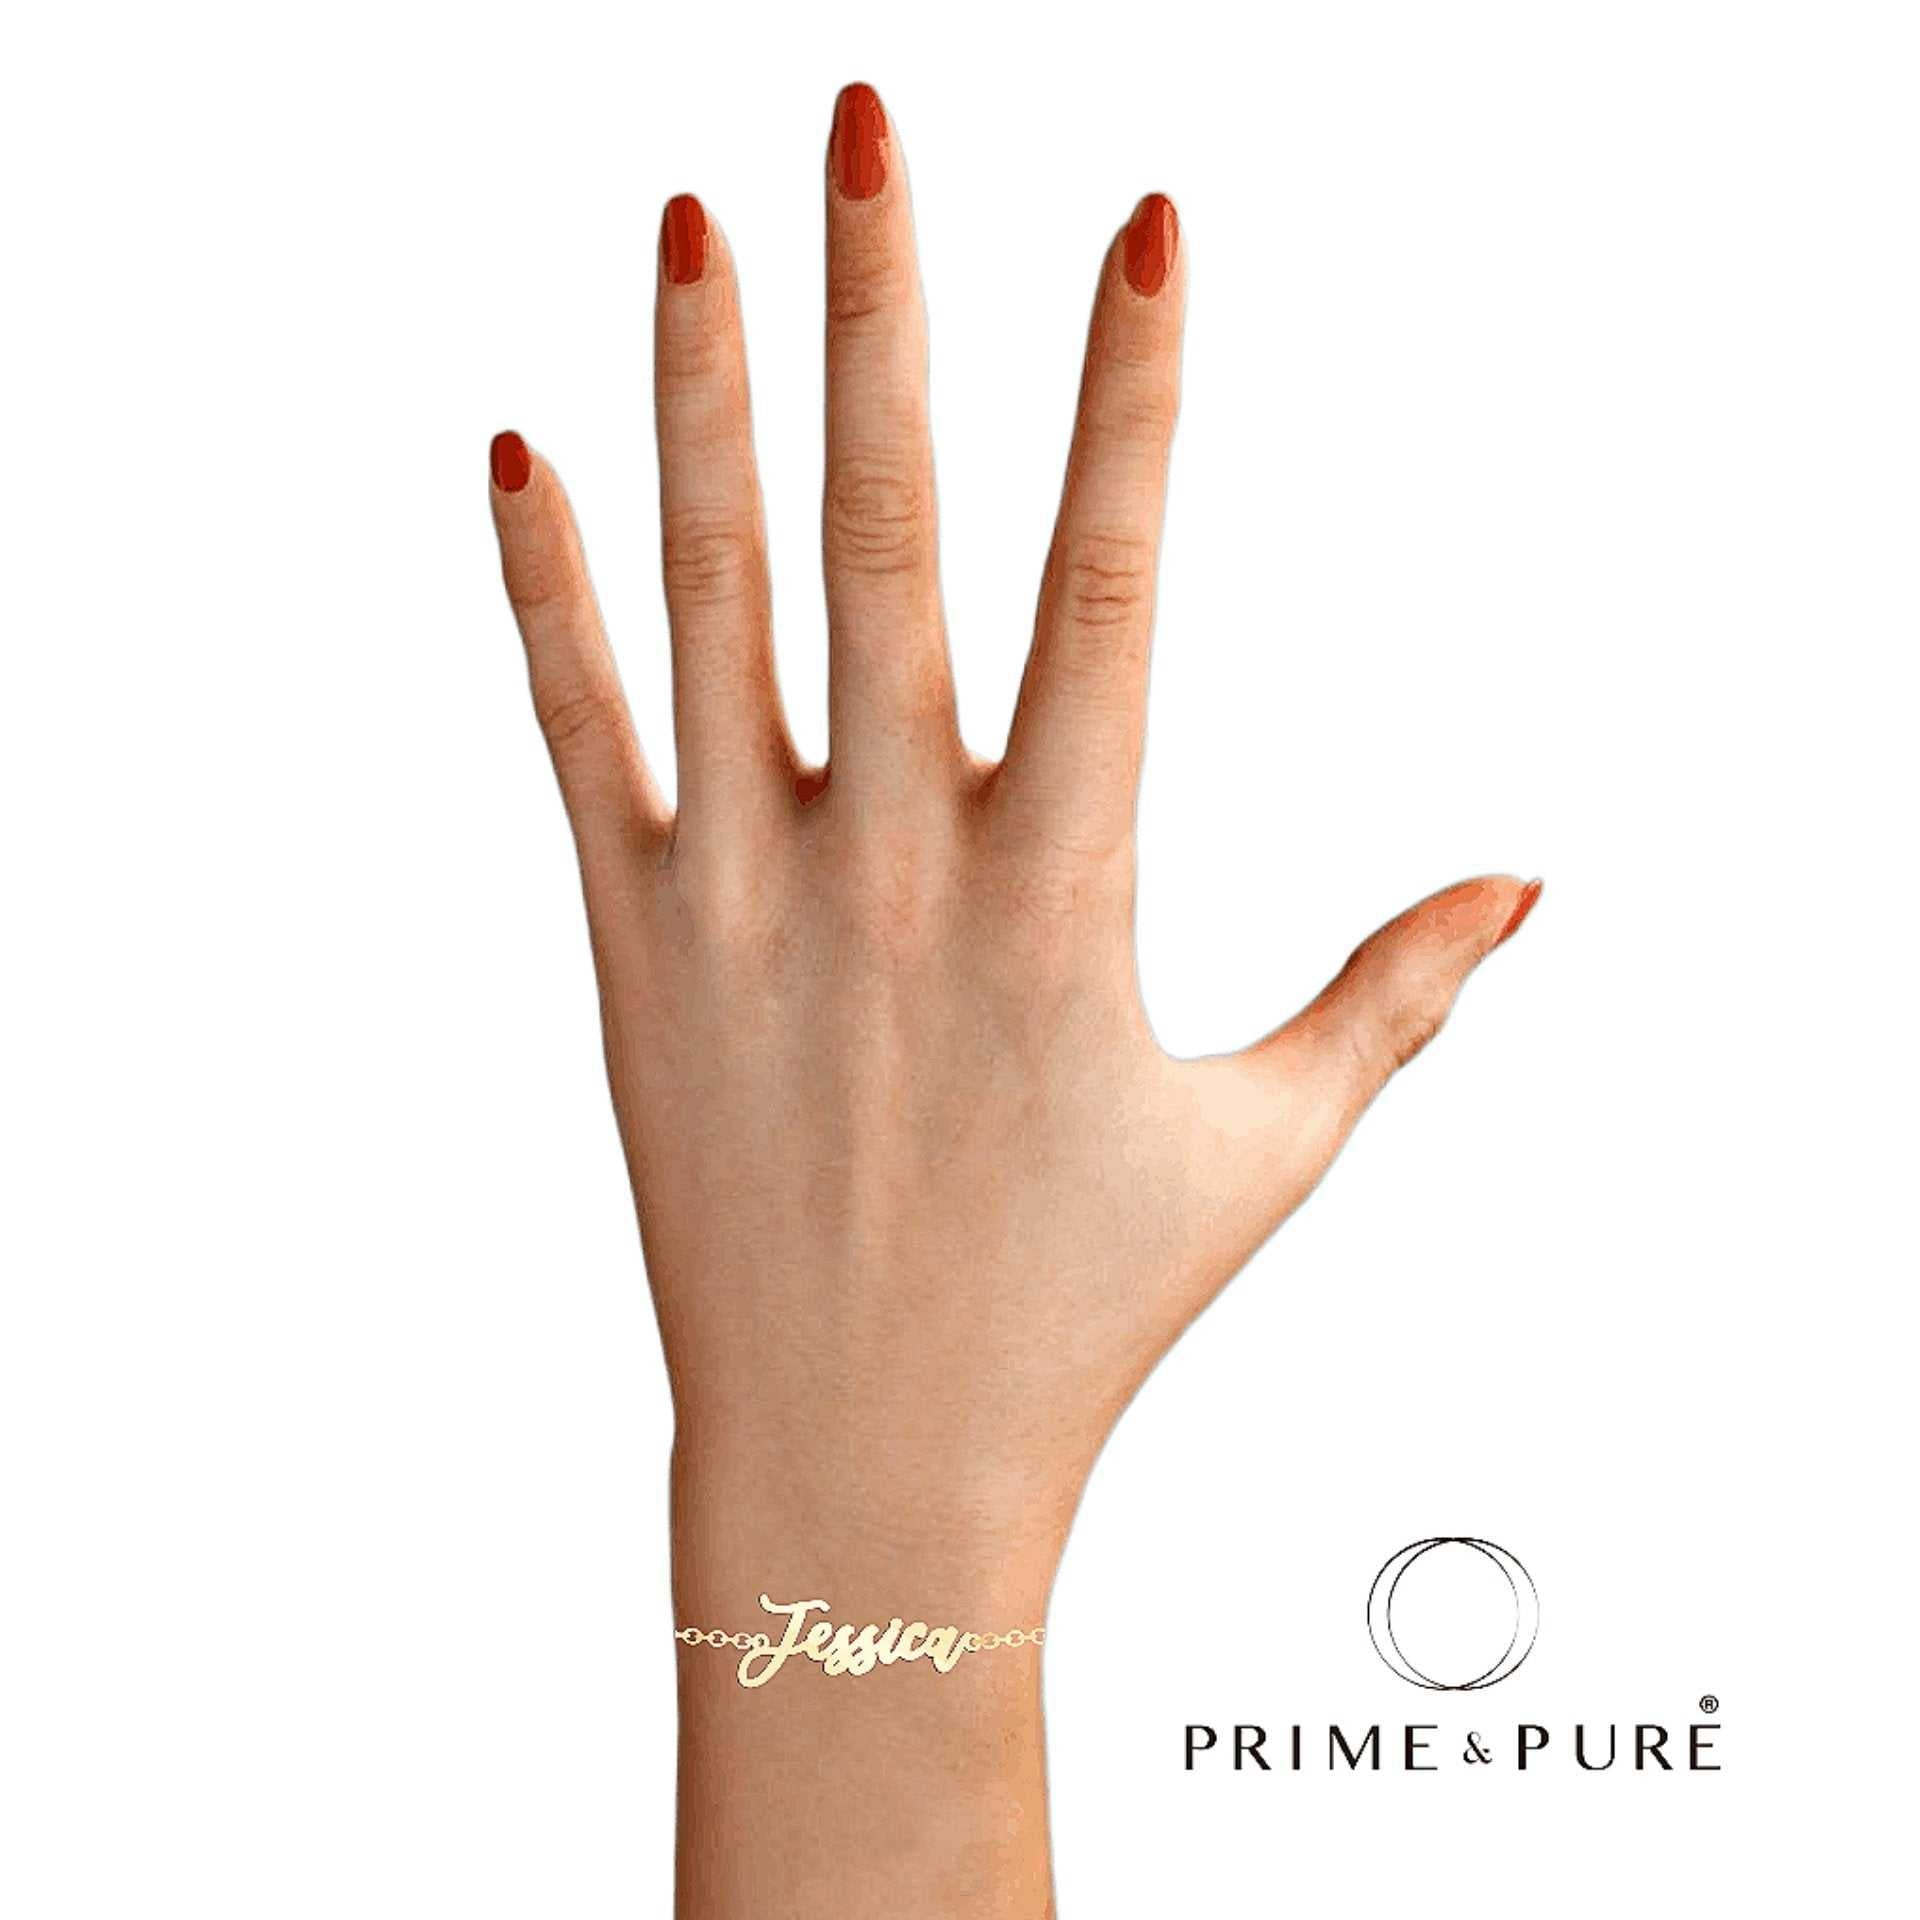 Elegance Name Bracelet - Prime & Pure